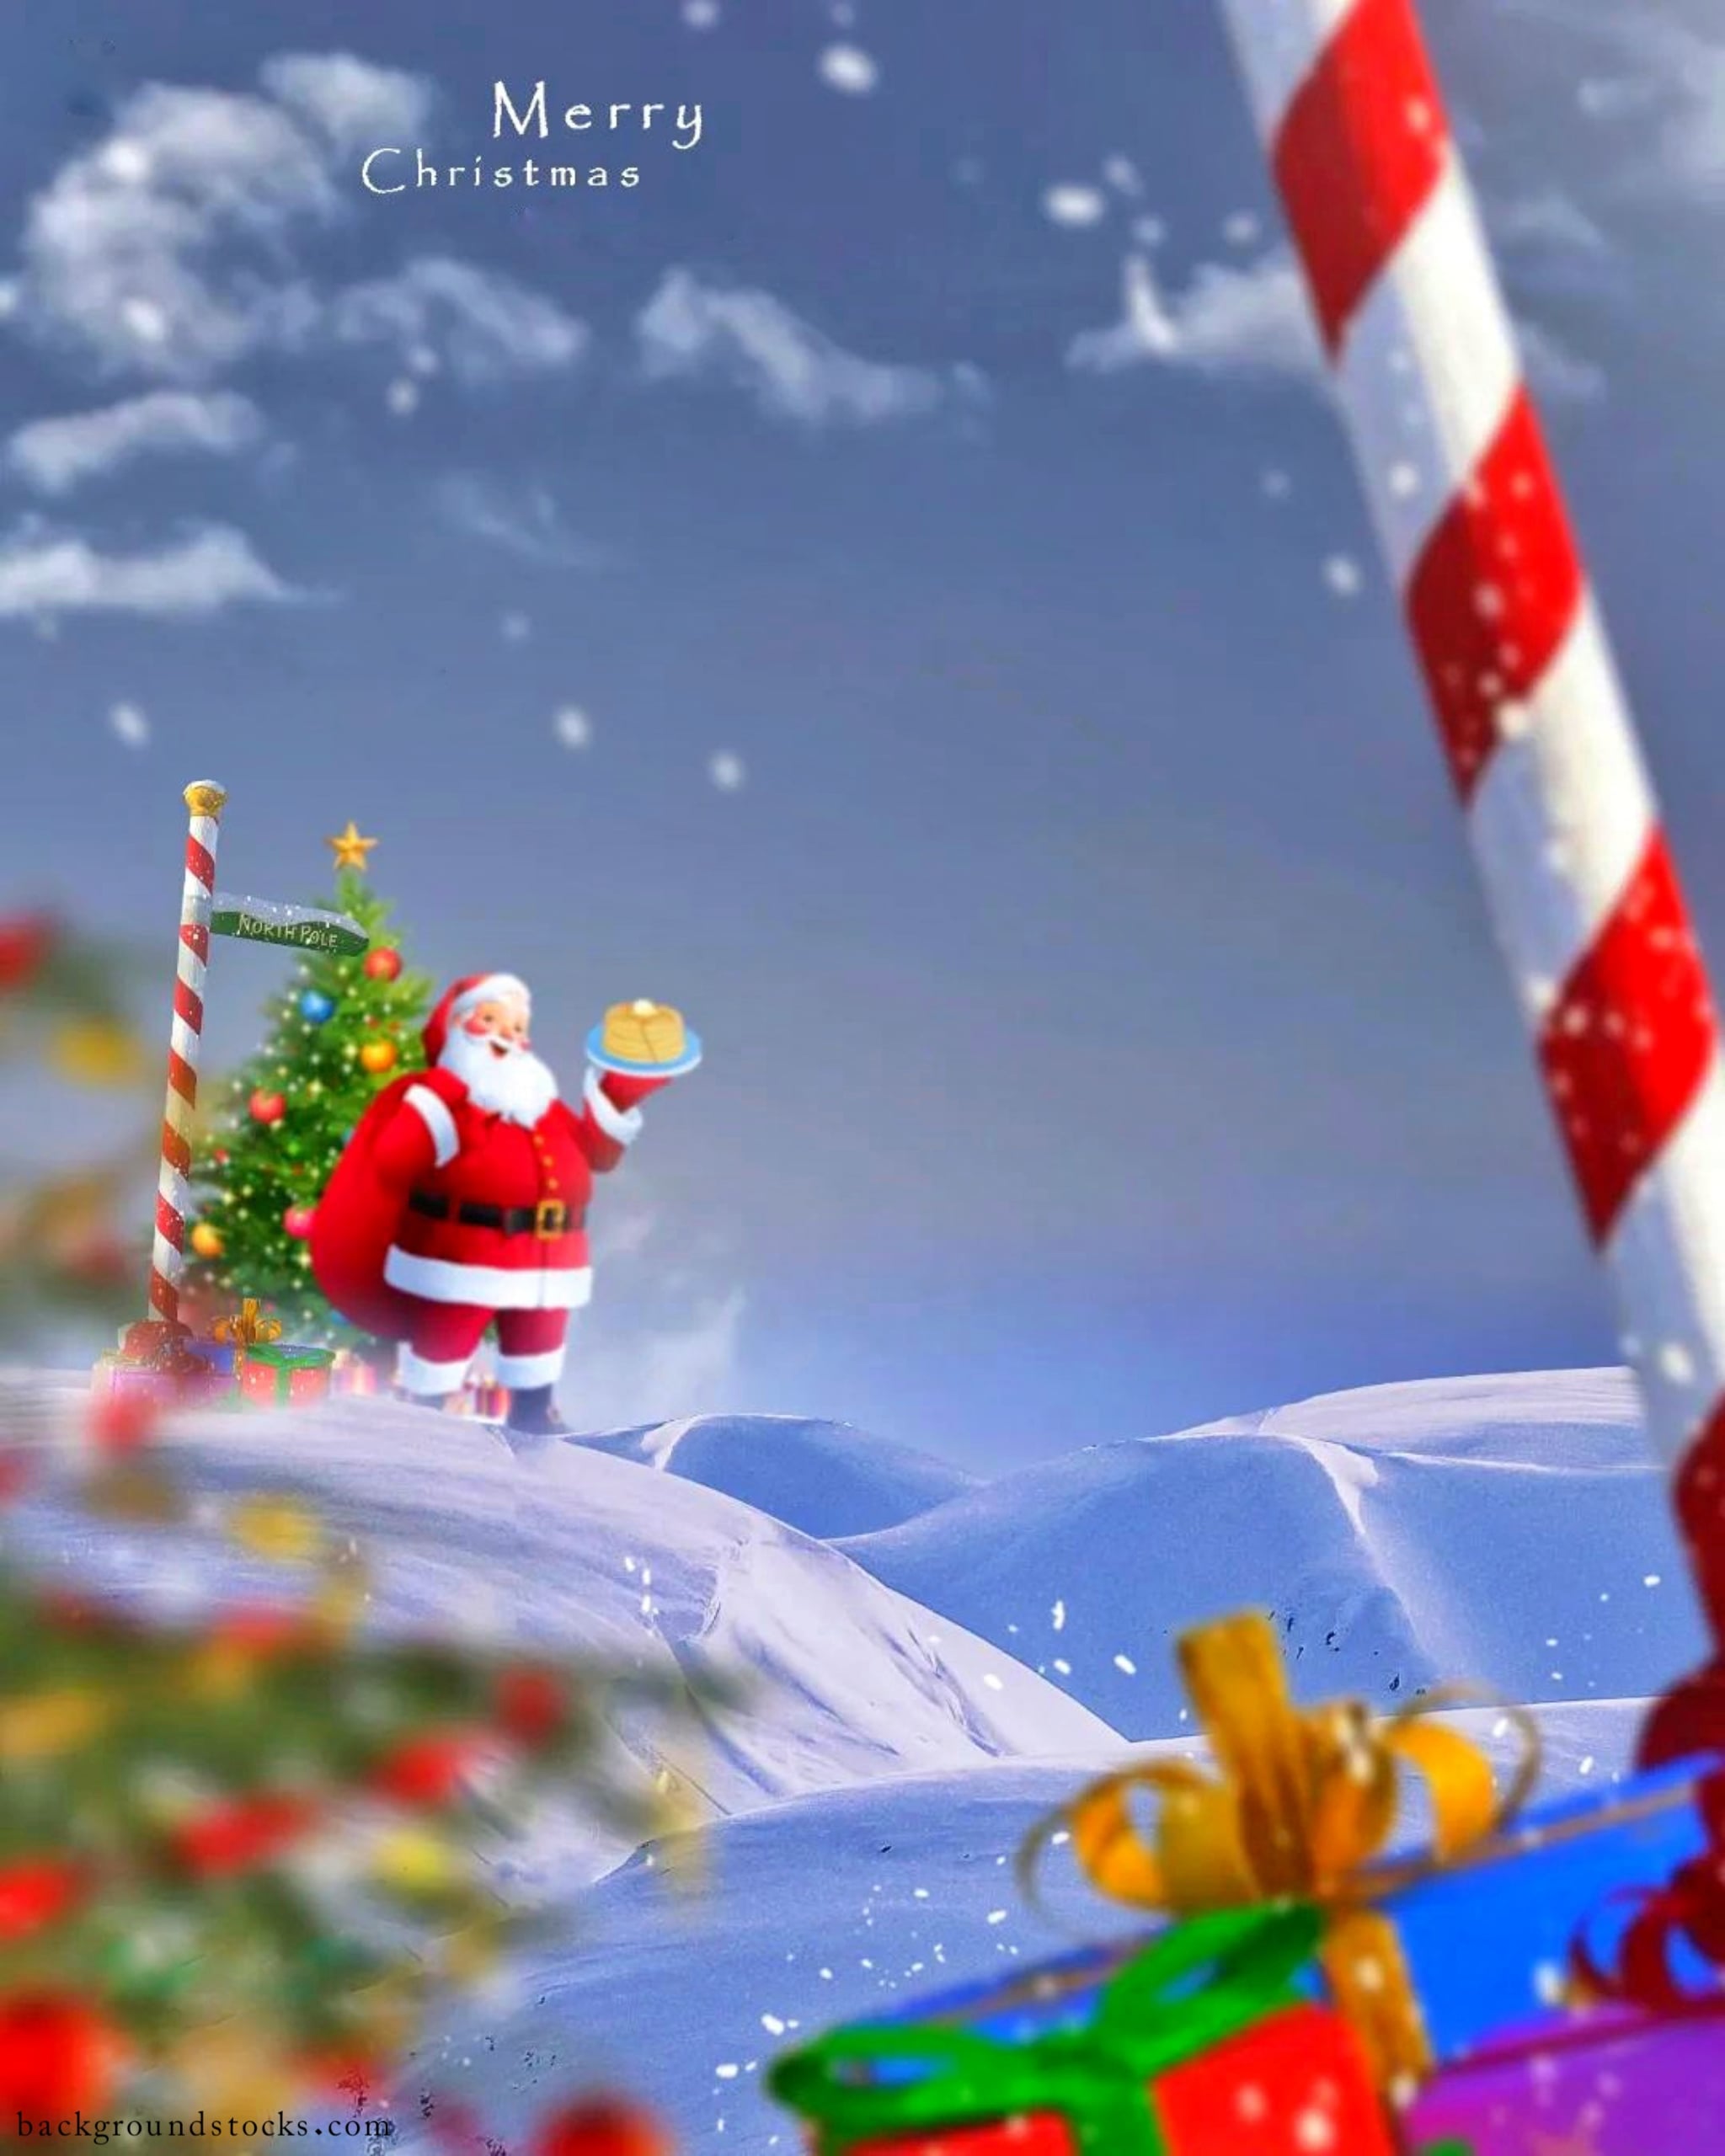 Merry Christmas Photo Edit Background 